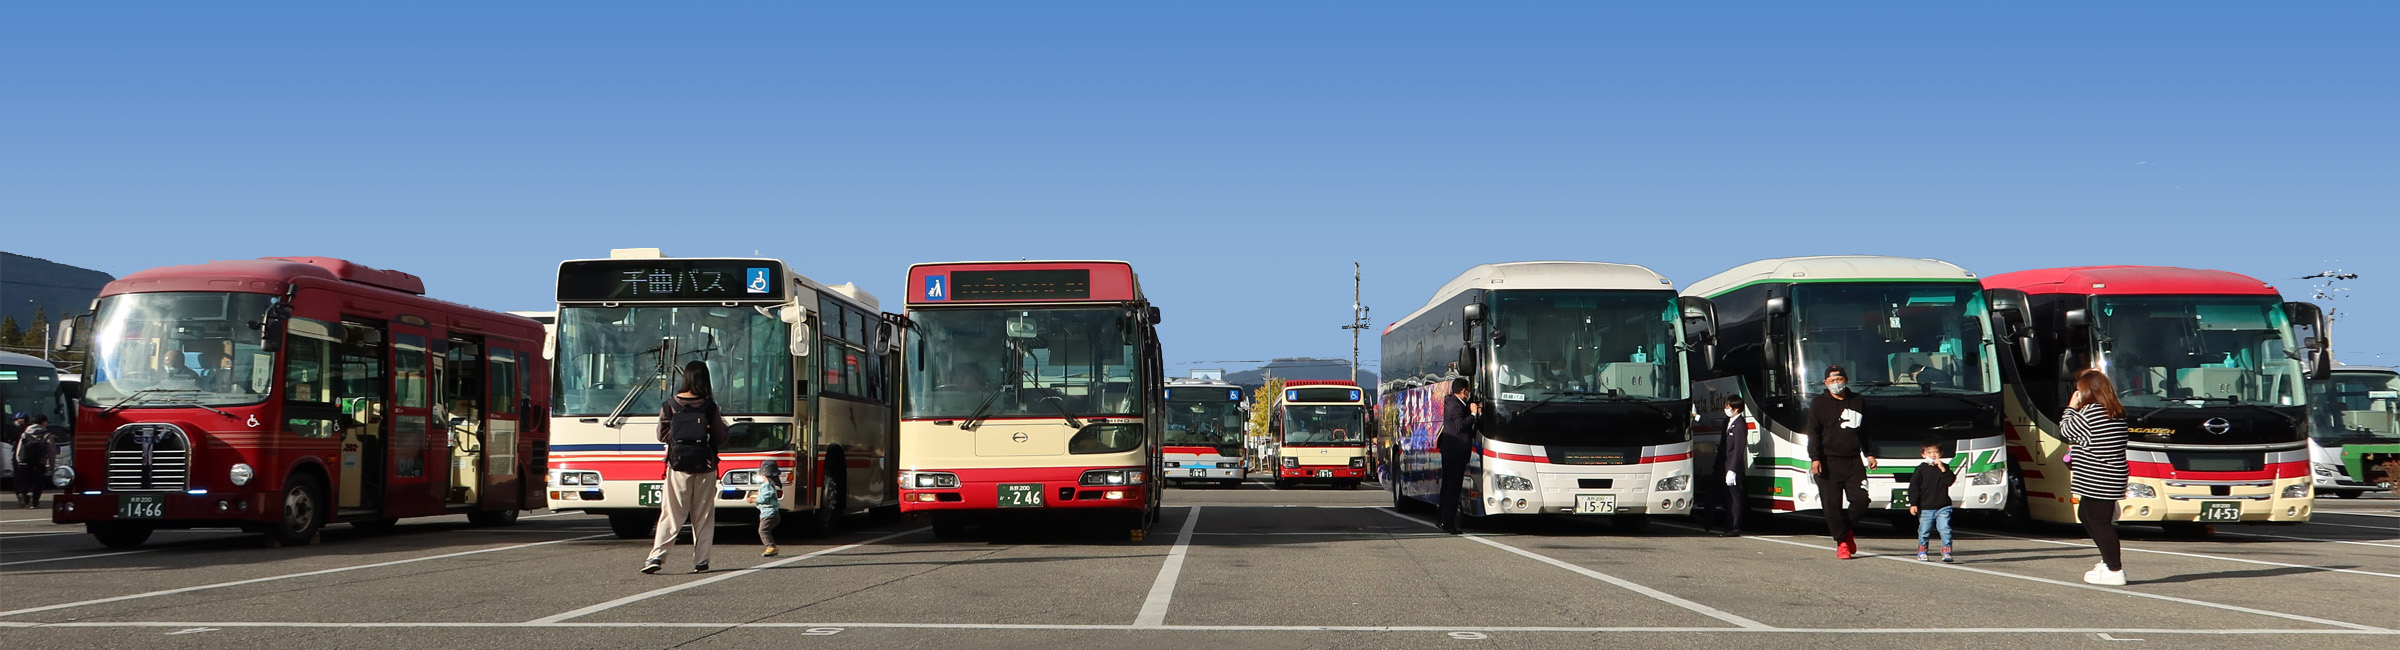 長野県バス協会